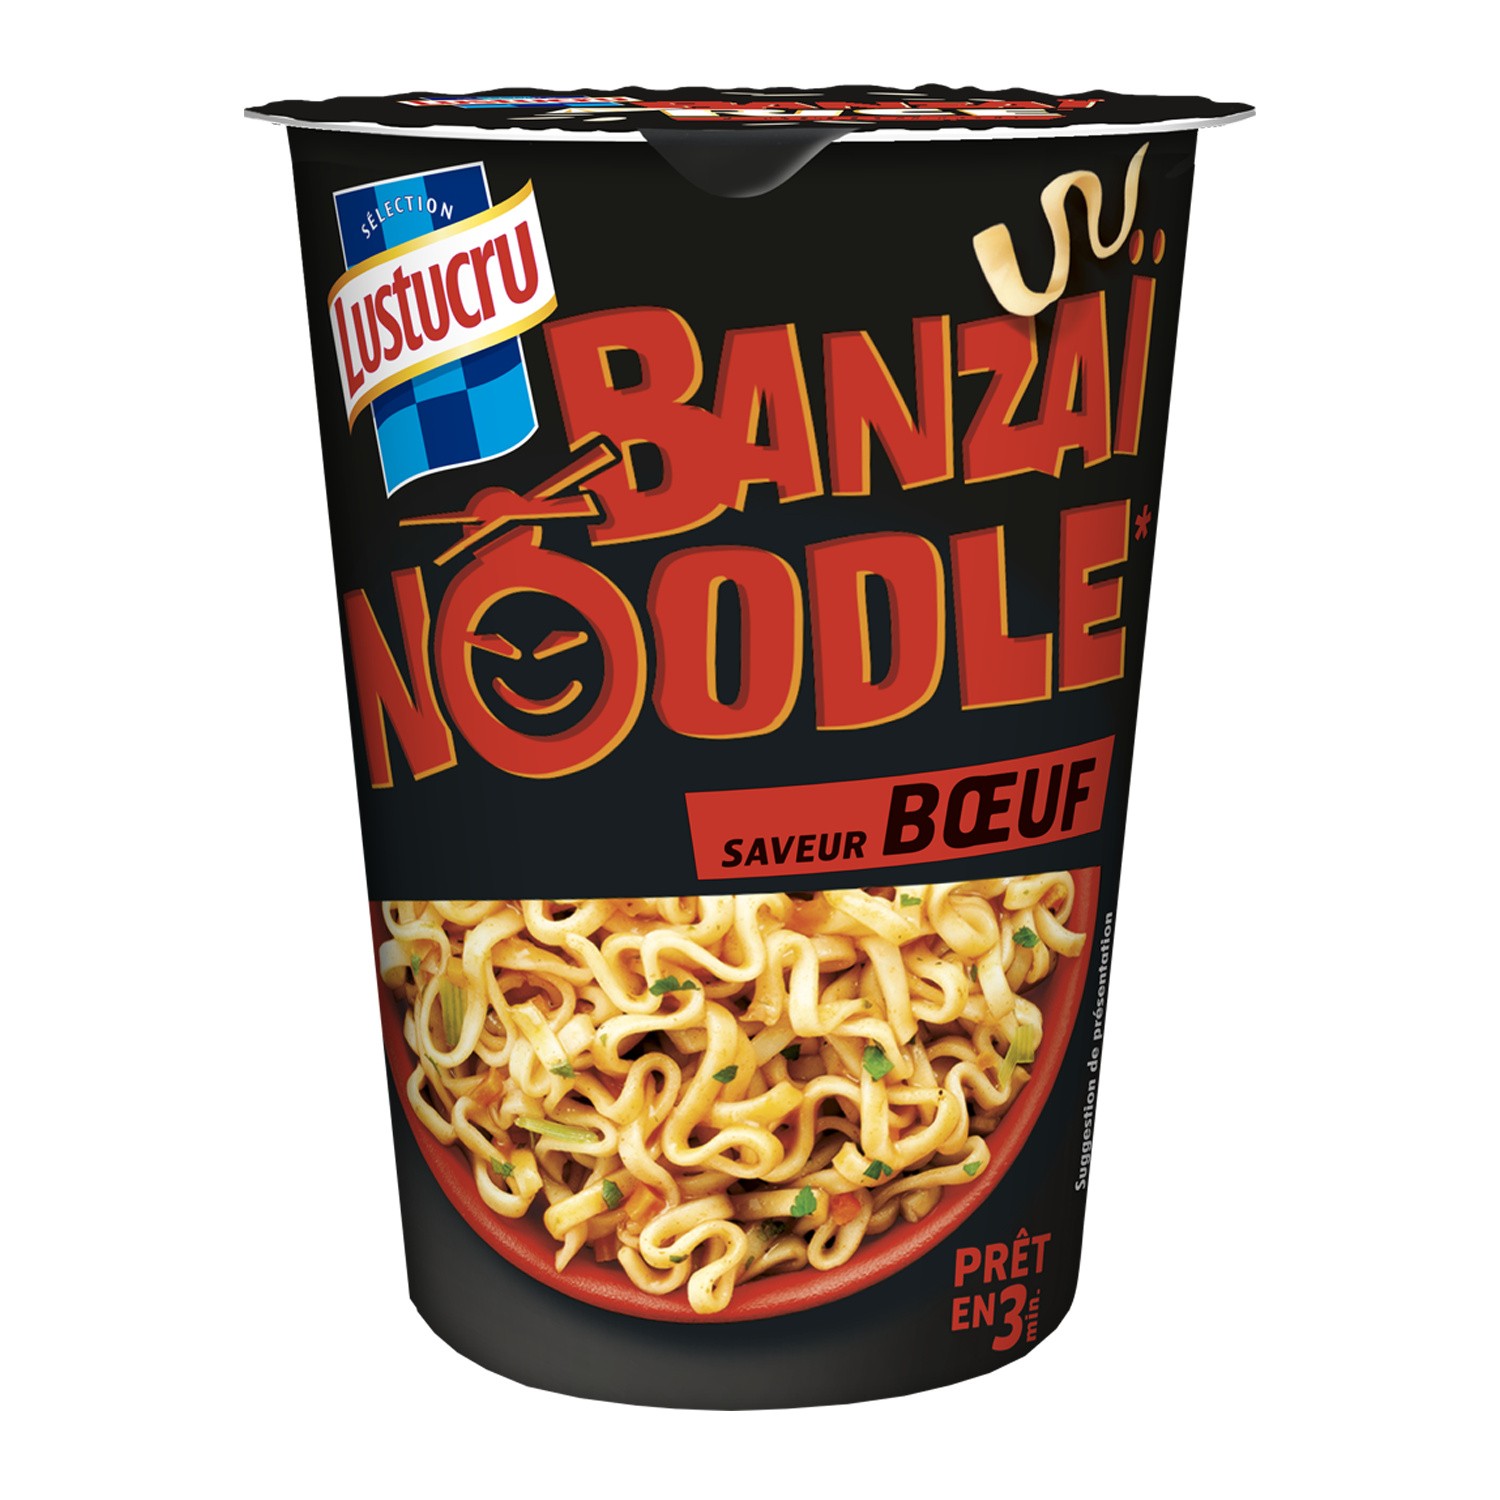 Banzaï Noodle Saveur boeuf